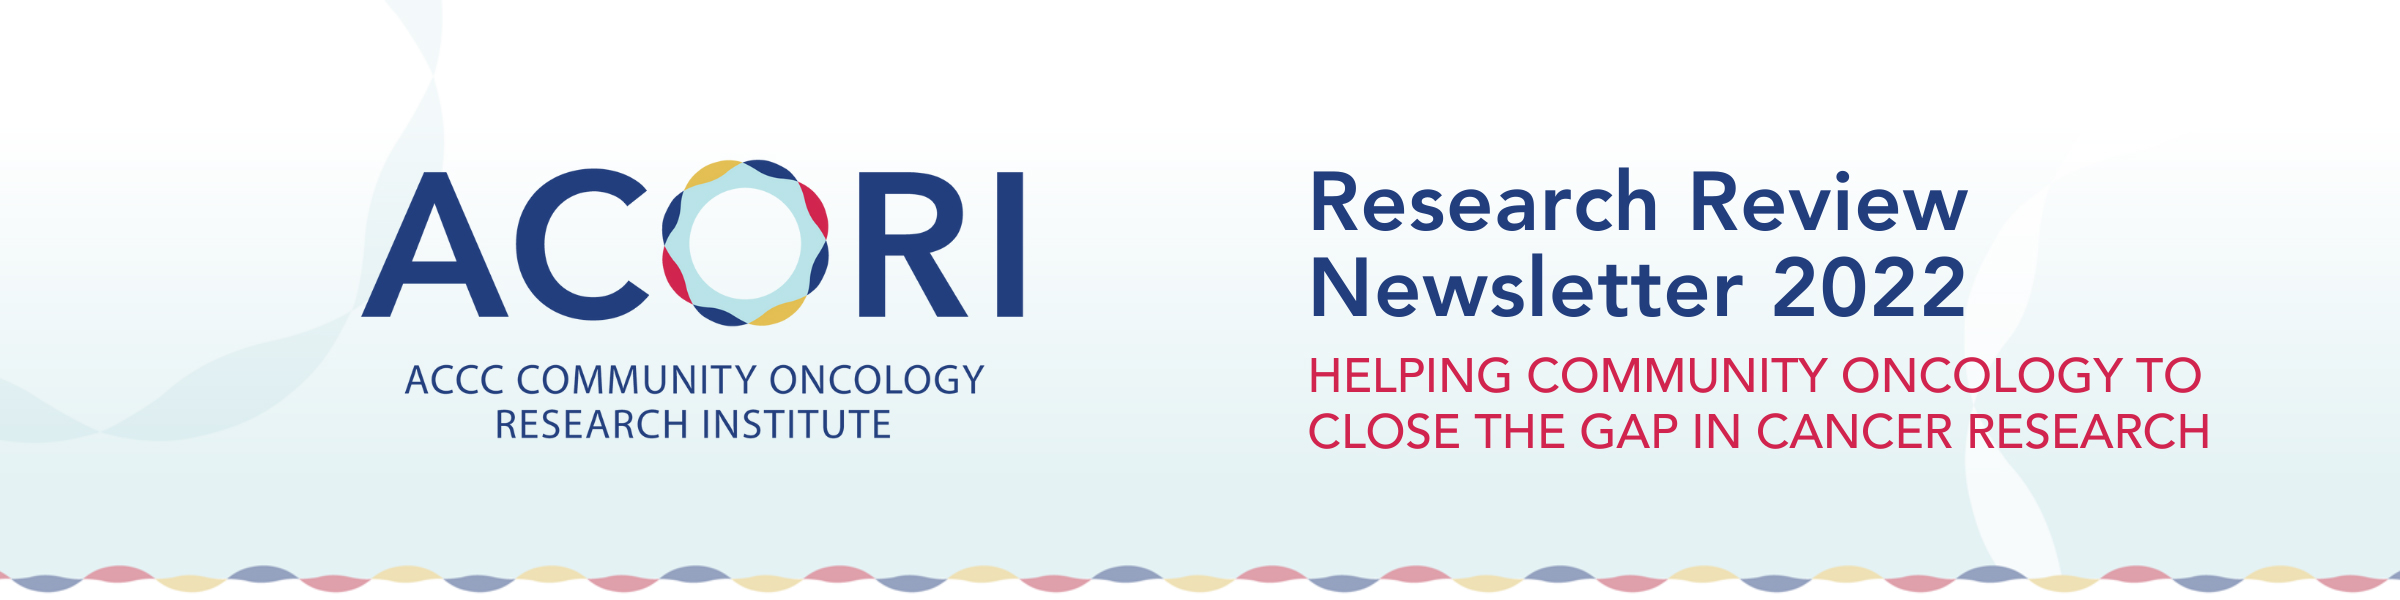 ACORI-Research-Review-2022-2400x600